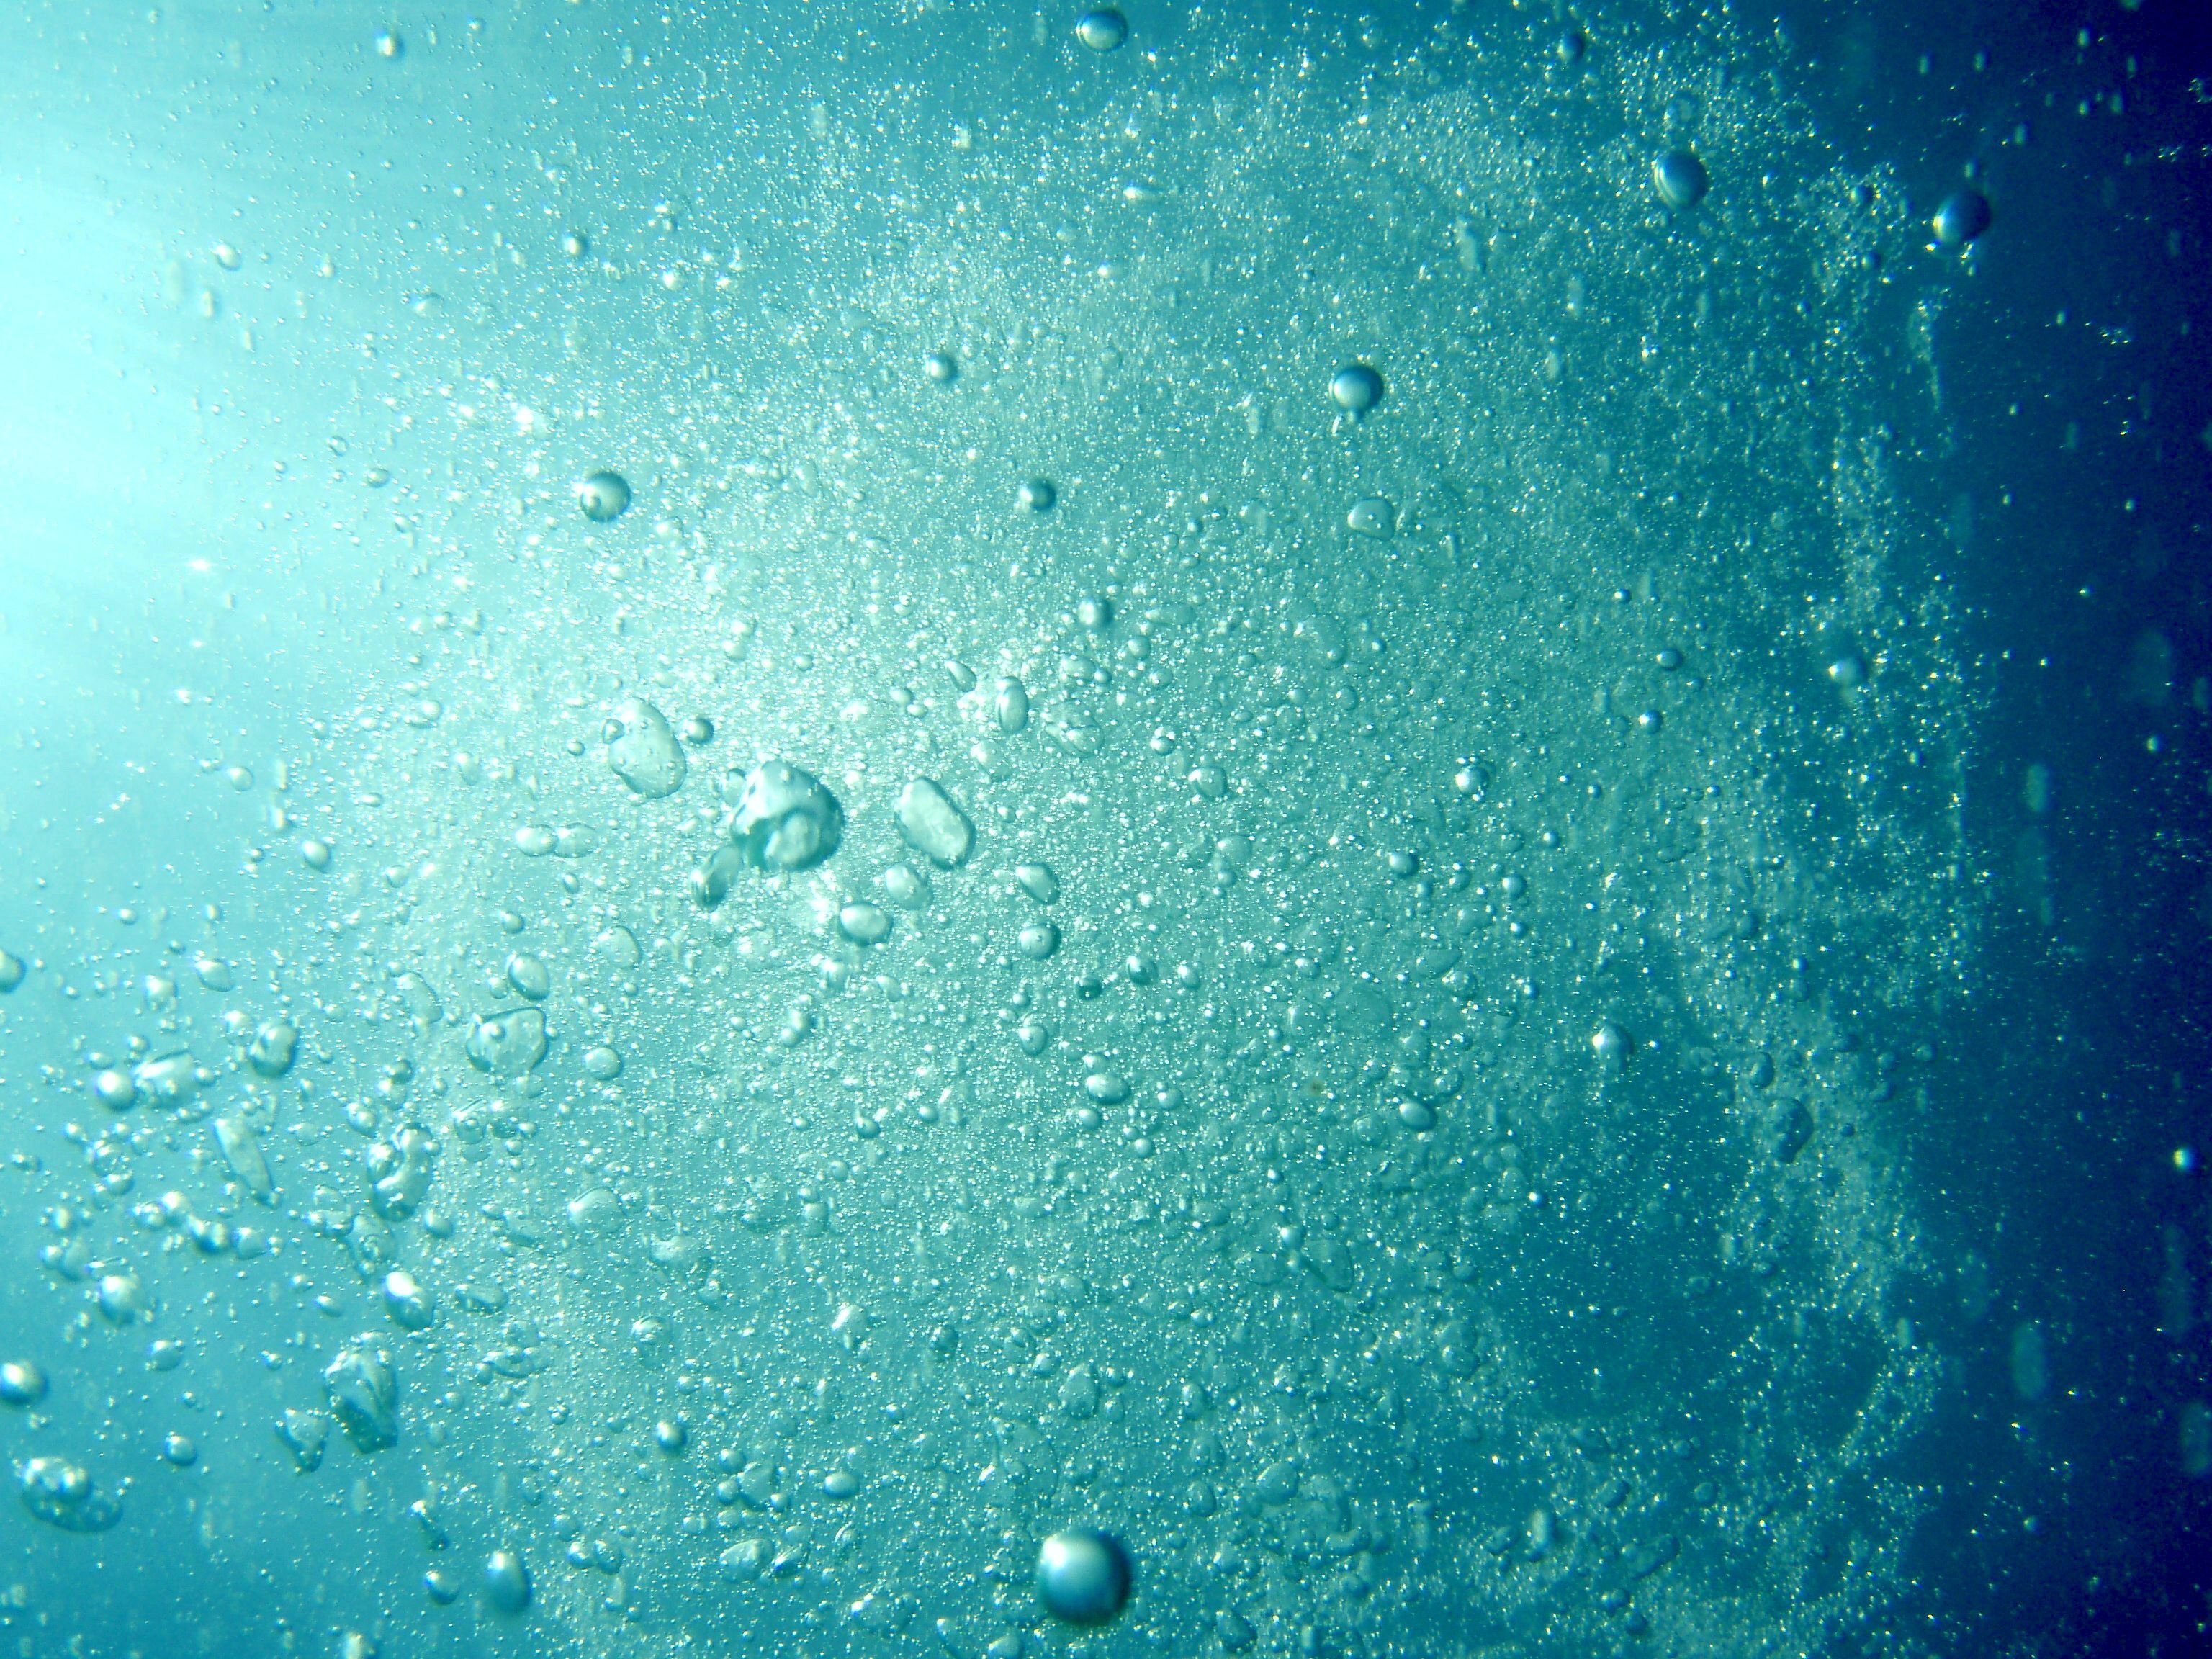 Пузырики под. Пузырьки в воде. Пузырьки под водой. Пузыри на воде текстура. Вода фон.